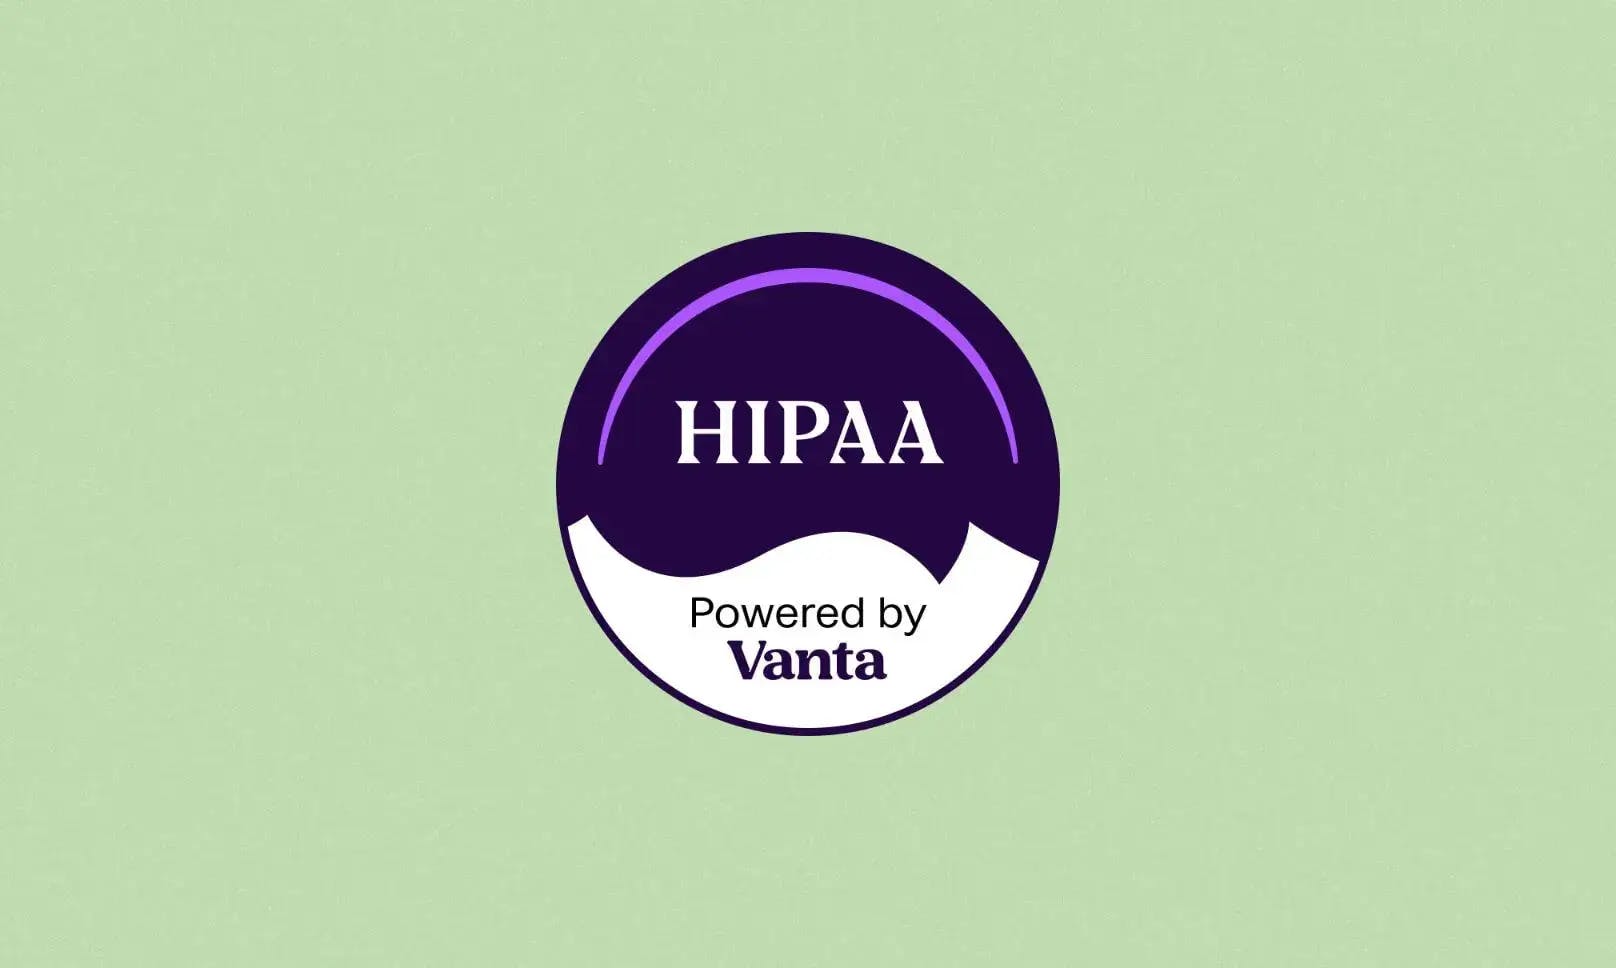 Vanta's HIPAA compliance logo against a green background.